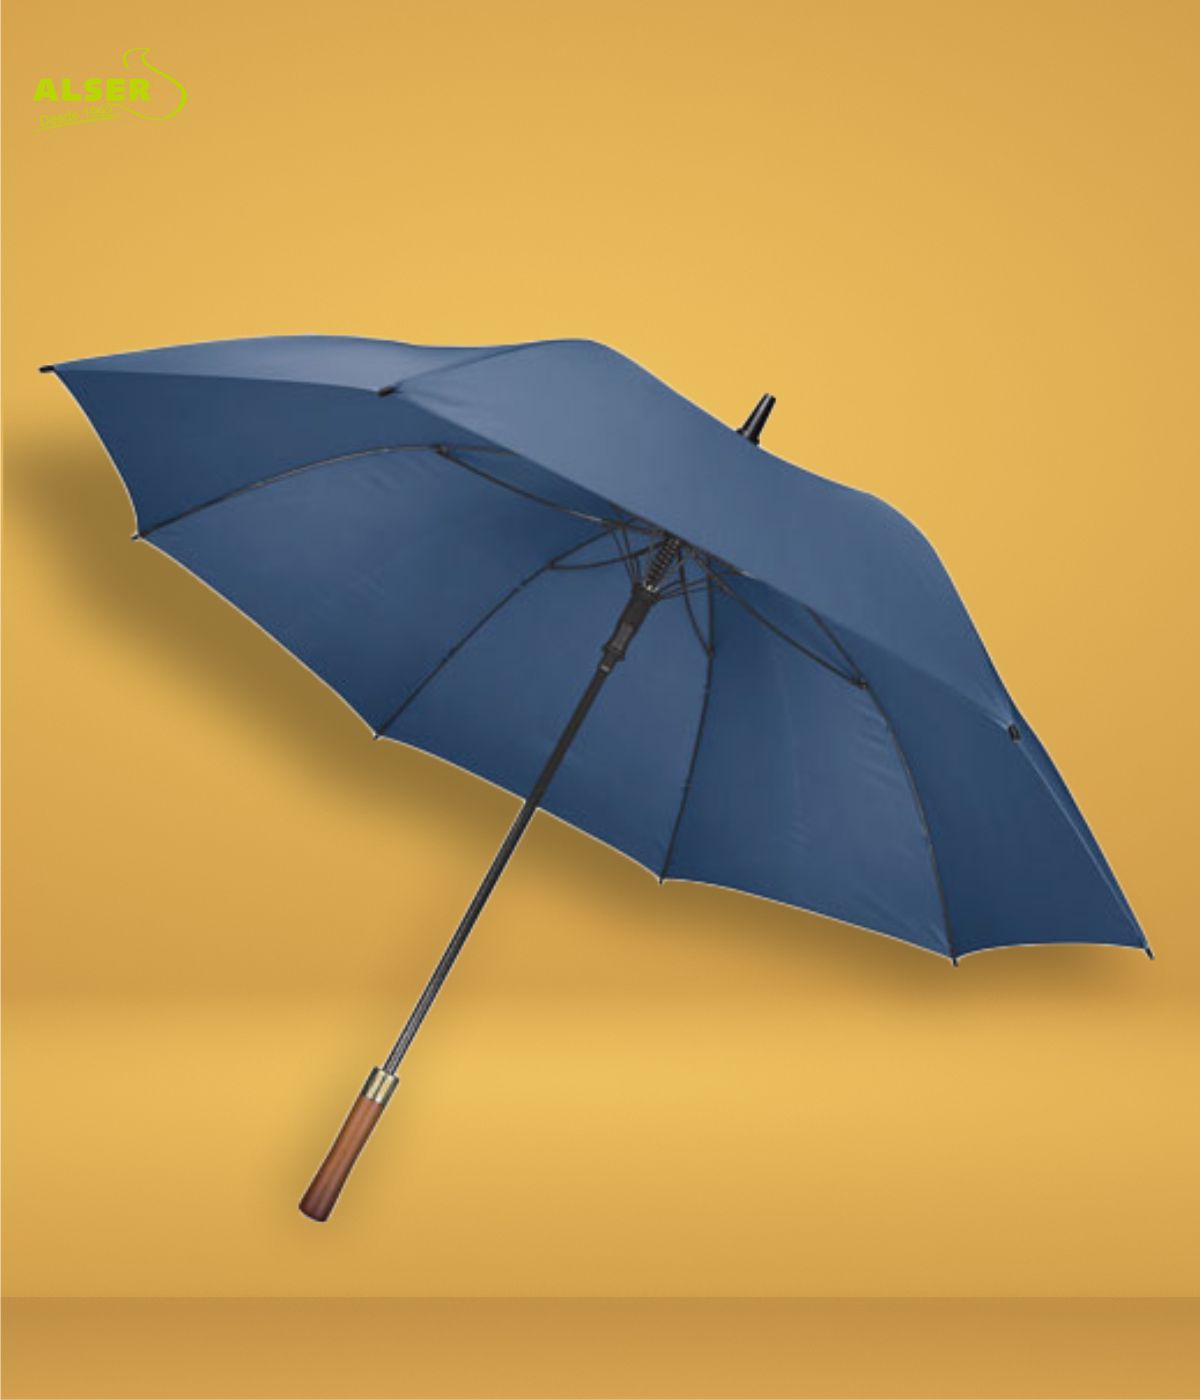 paraguas xxl – Compra paraguas xxl con envío gratis en AliExpress version